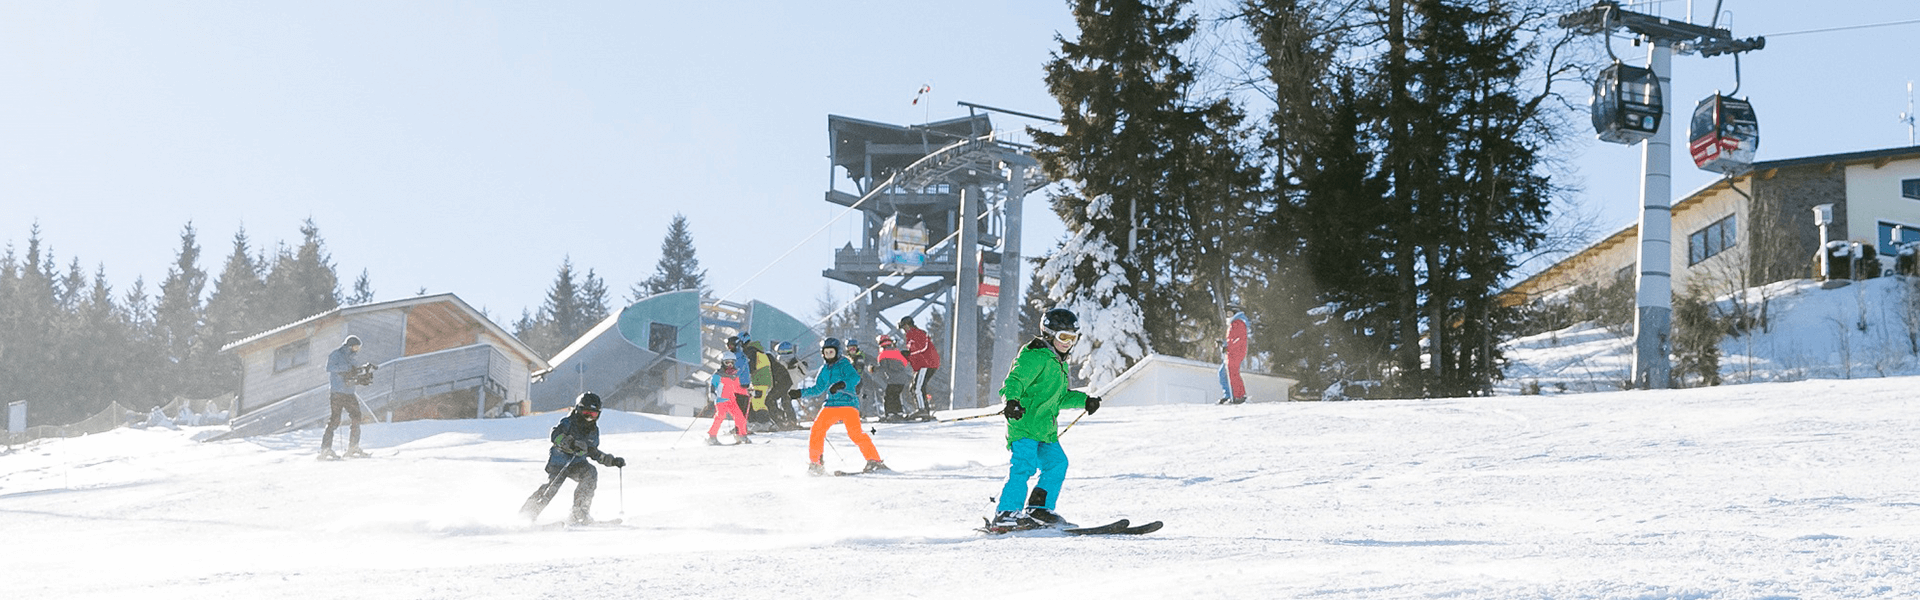 Kinder fahren am Semmering Ski